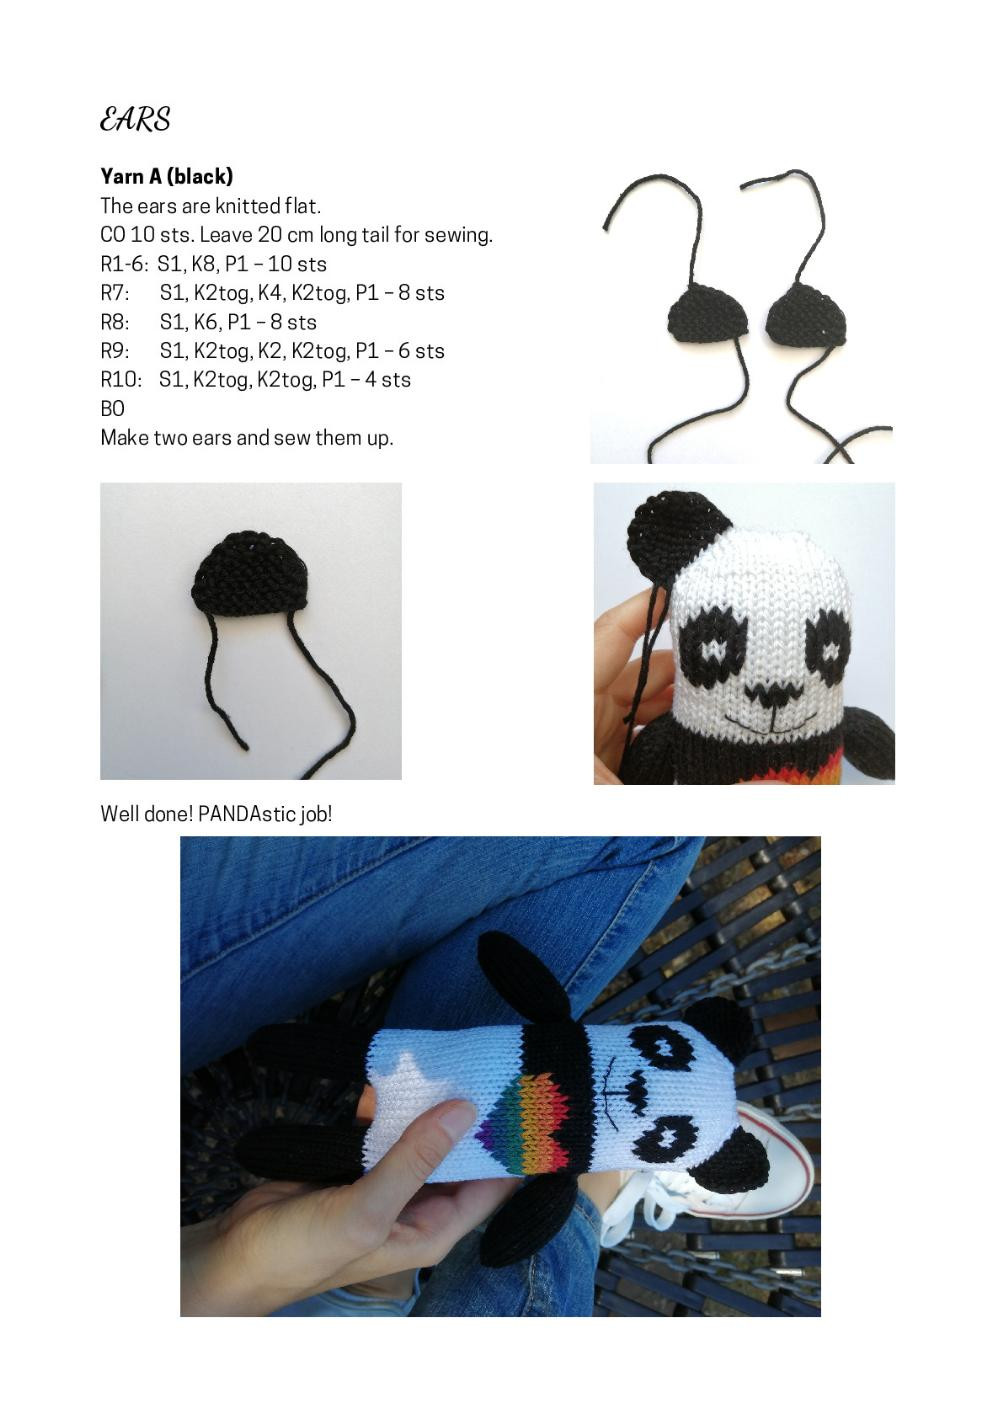 Pandastic Beast crochet pattern